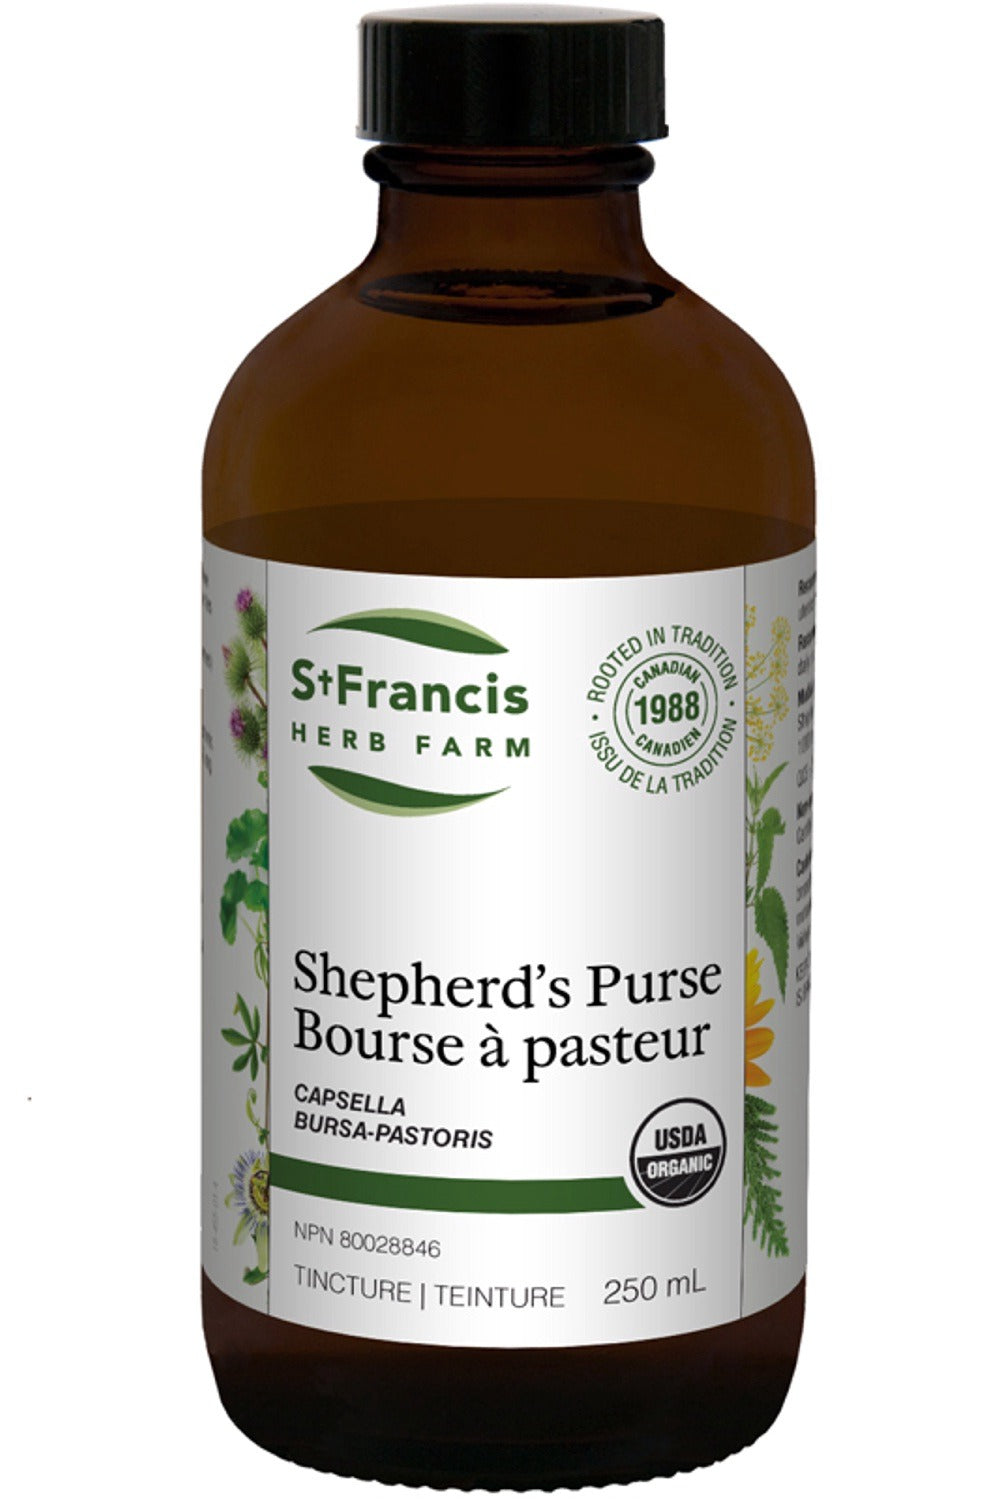 ST FRANCIS HERB FARM Shepherd's Purse (250 ml)